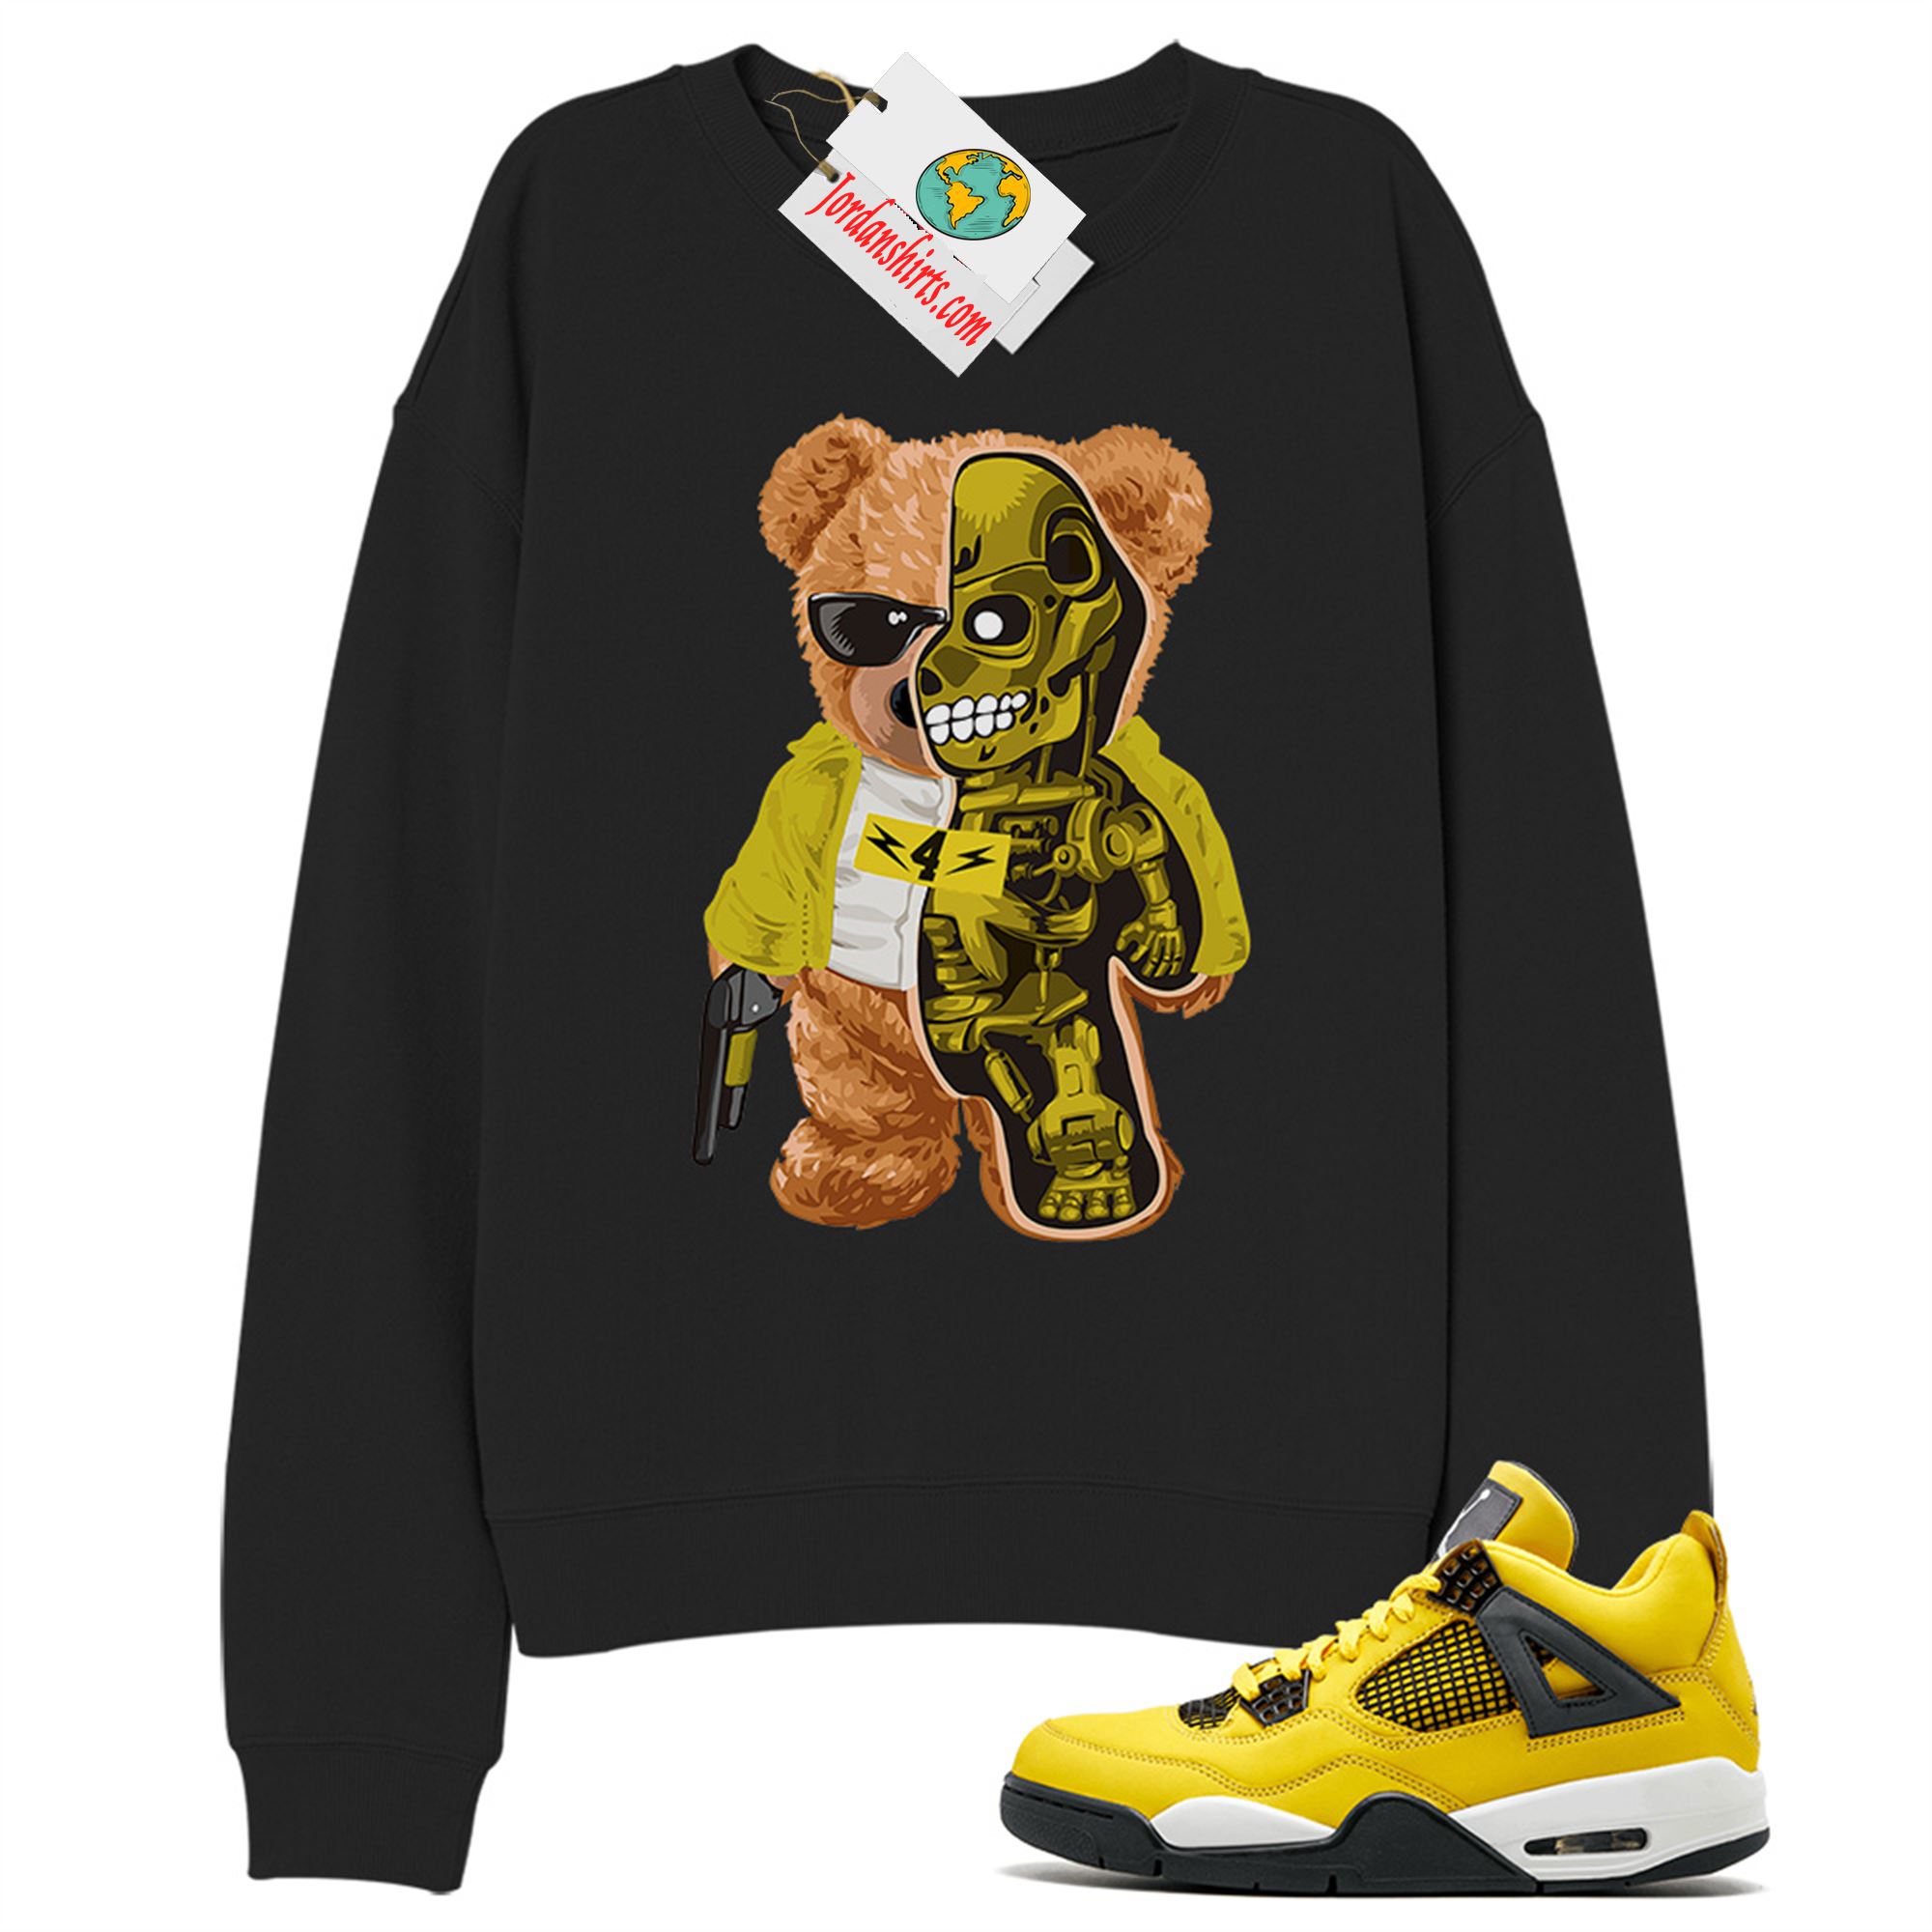 Jordan 4 Sweatshirt, Teddy Bear Half Robot Black Sweatshirt Air Jordan 4 Tour Yellowlightning 4s Size Up To 5xl